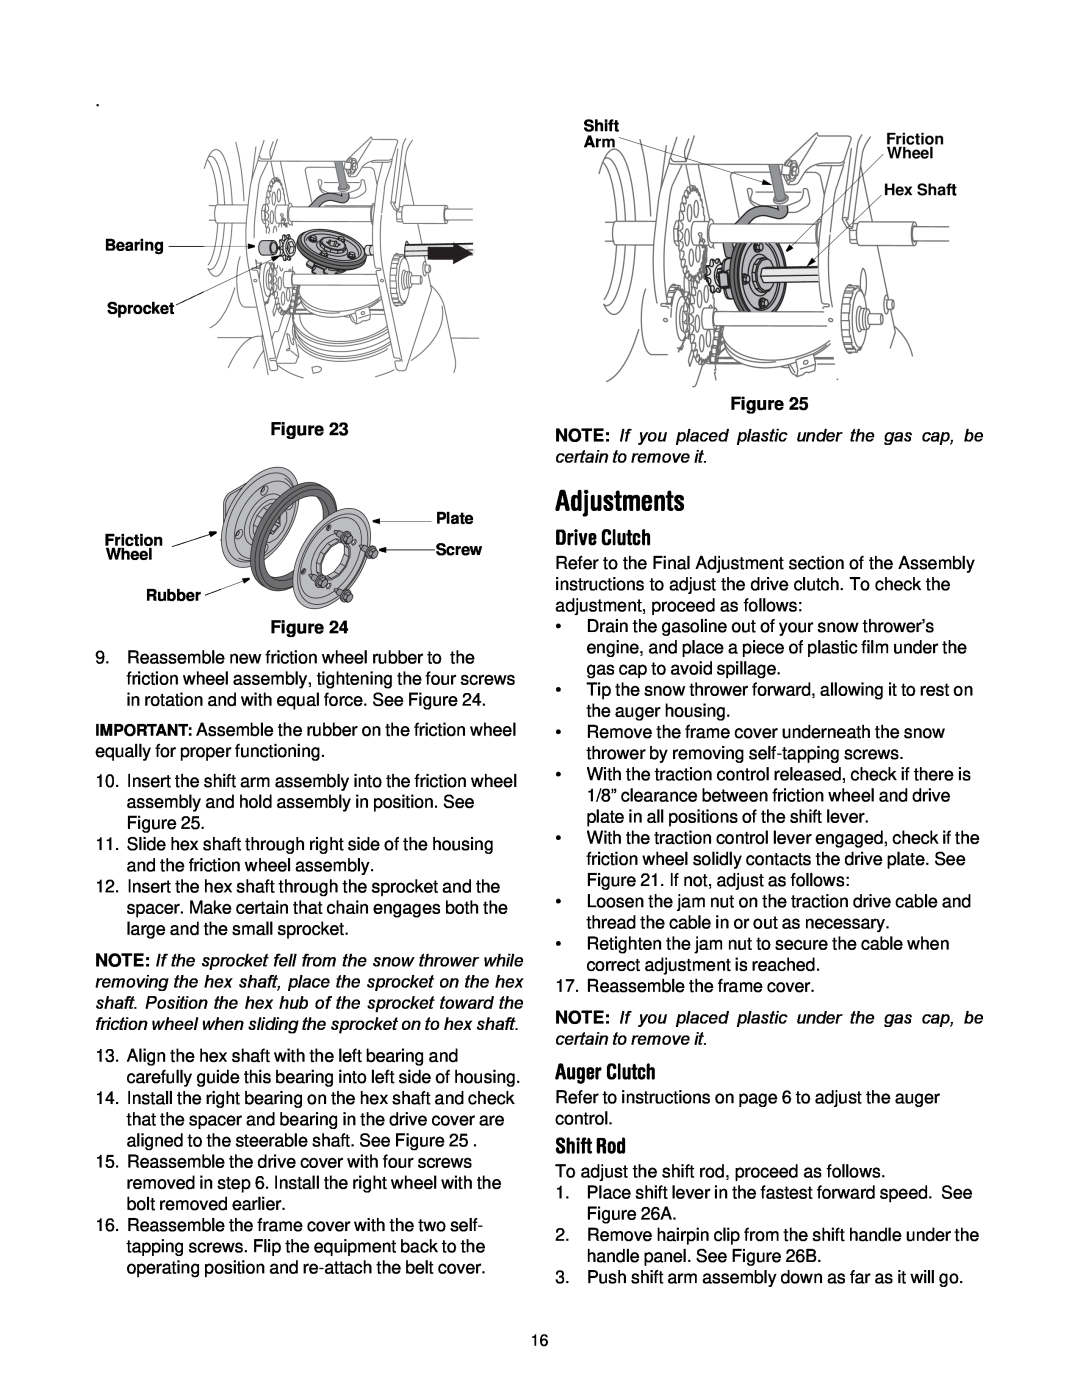 Troy-Bilt 500 series manual Adjustments, Drive Clutch, Auger Clutch, Shift Rod, certain to remove it 